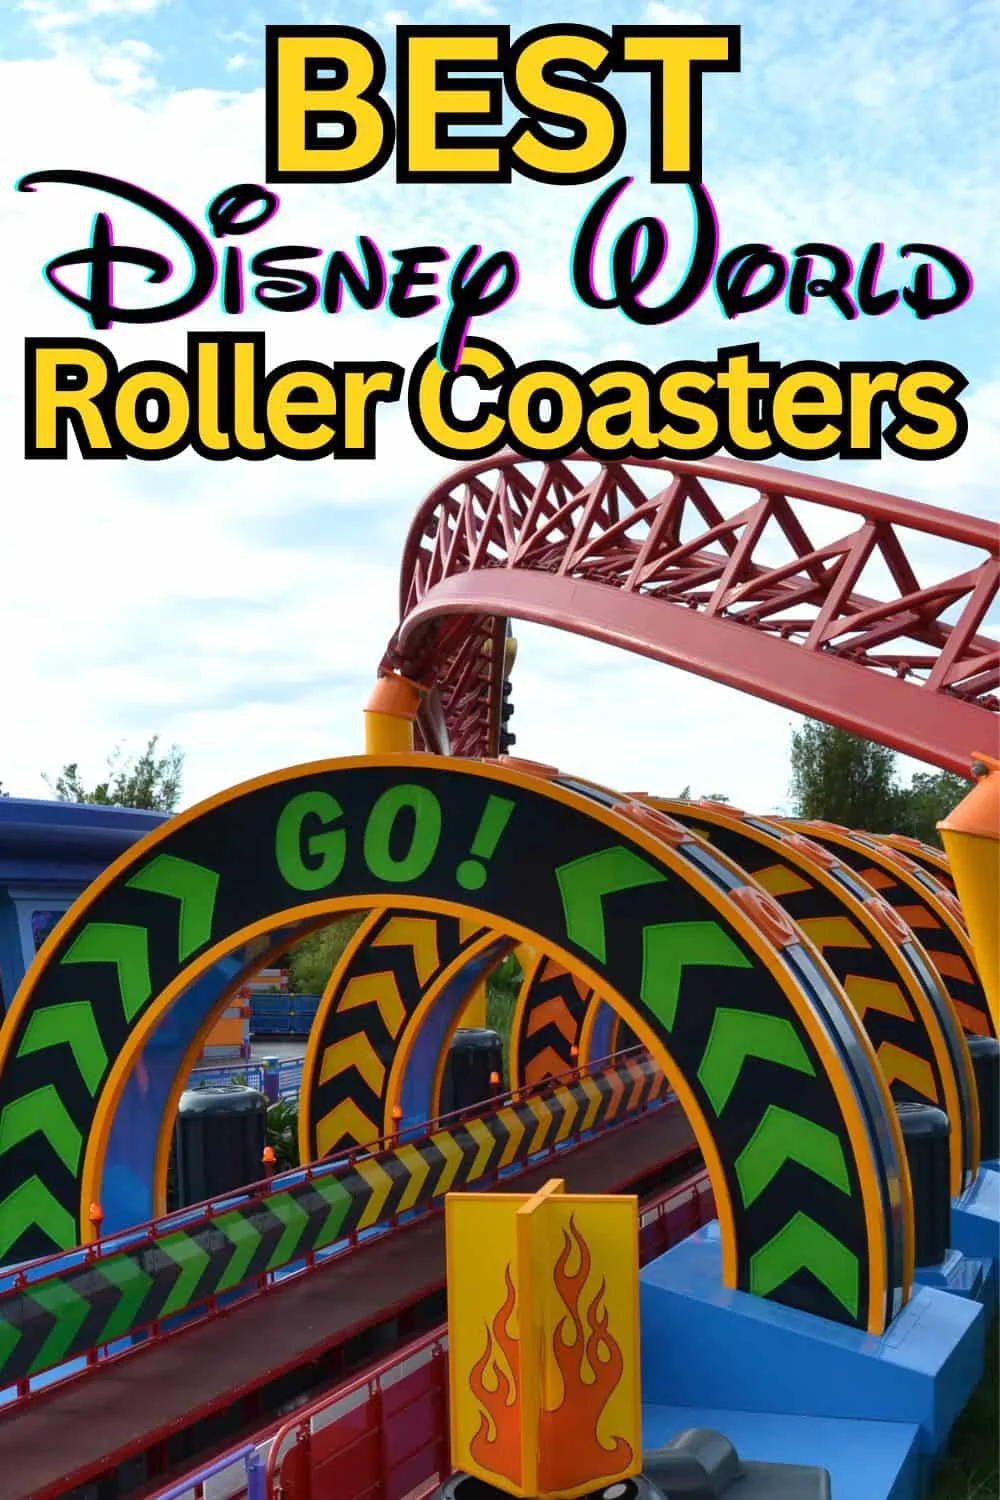 9 Disney World Roller Coasters